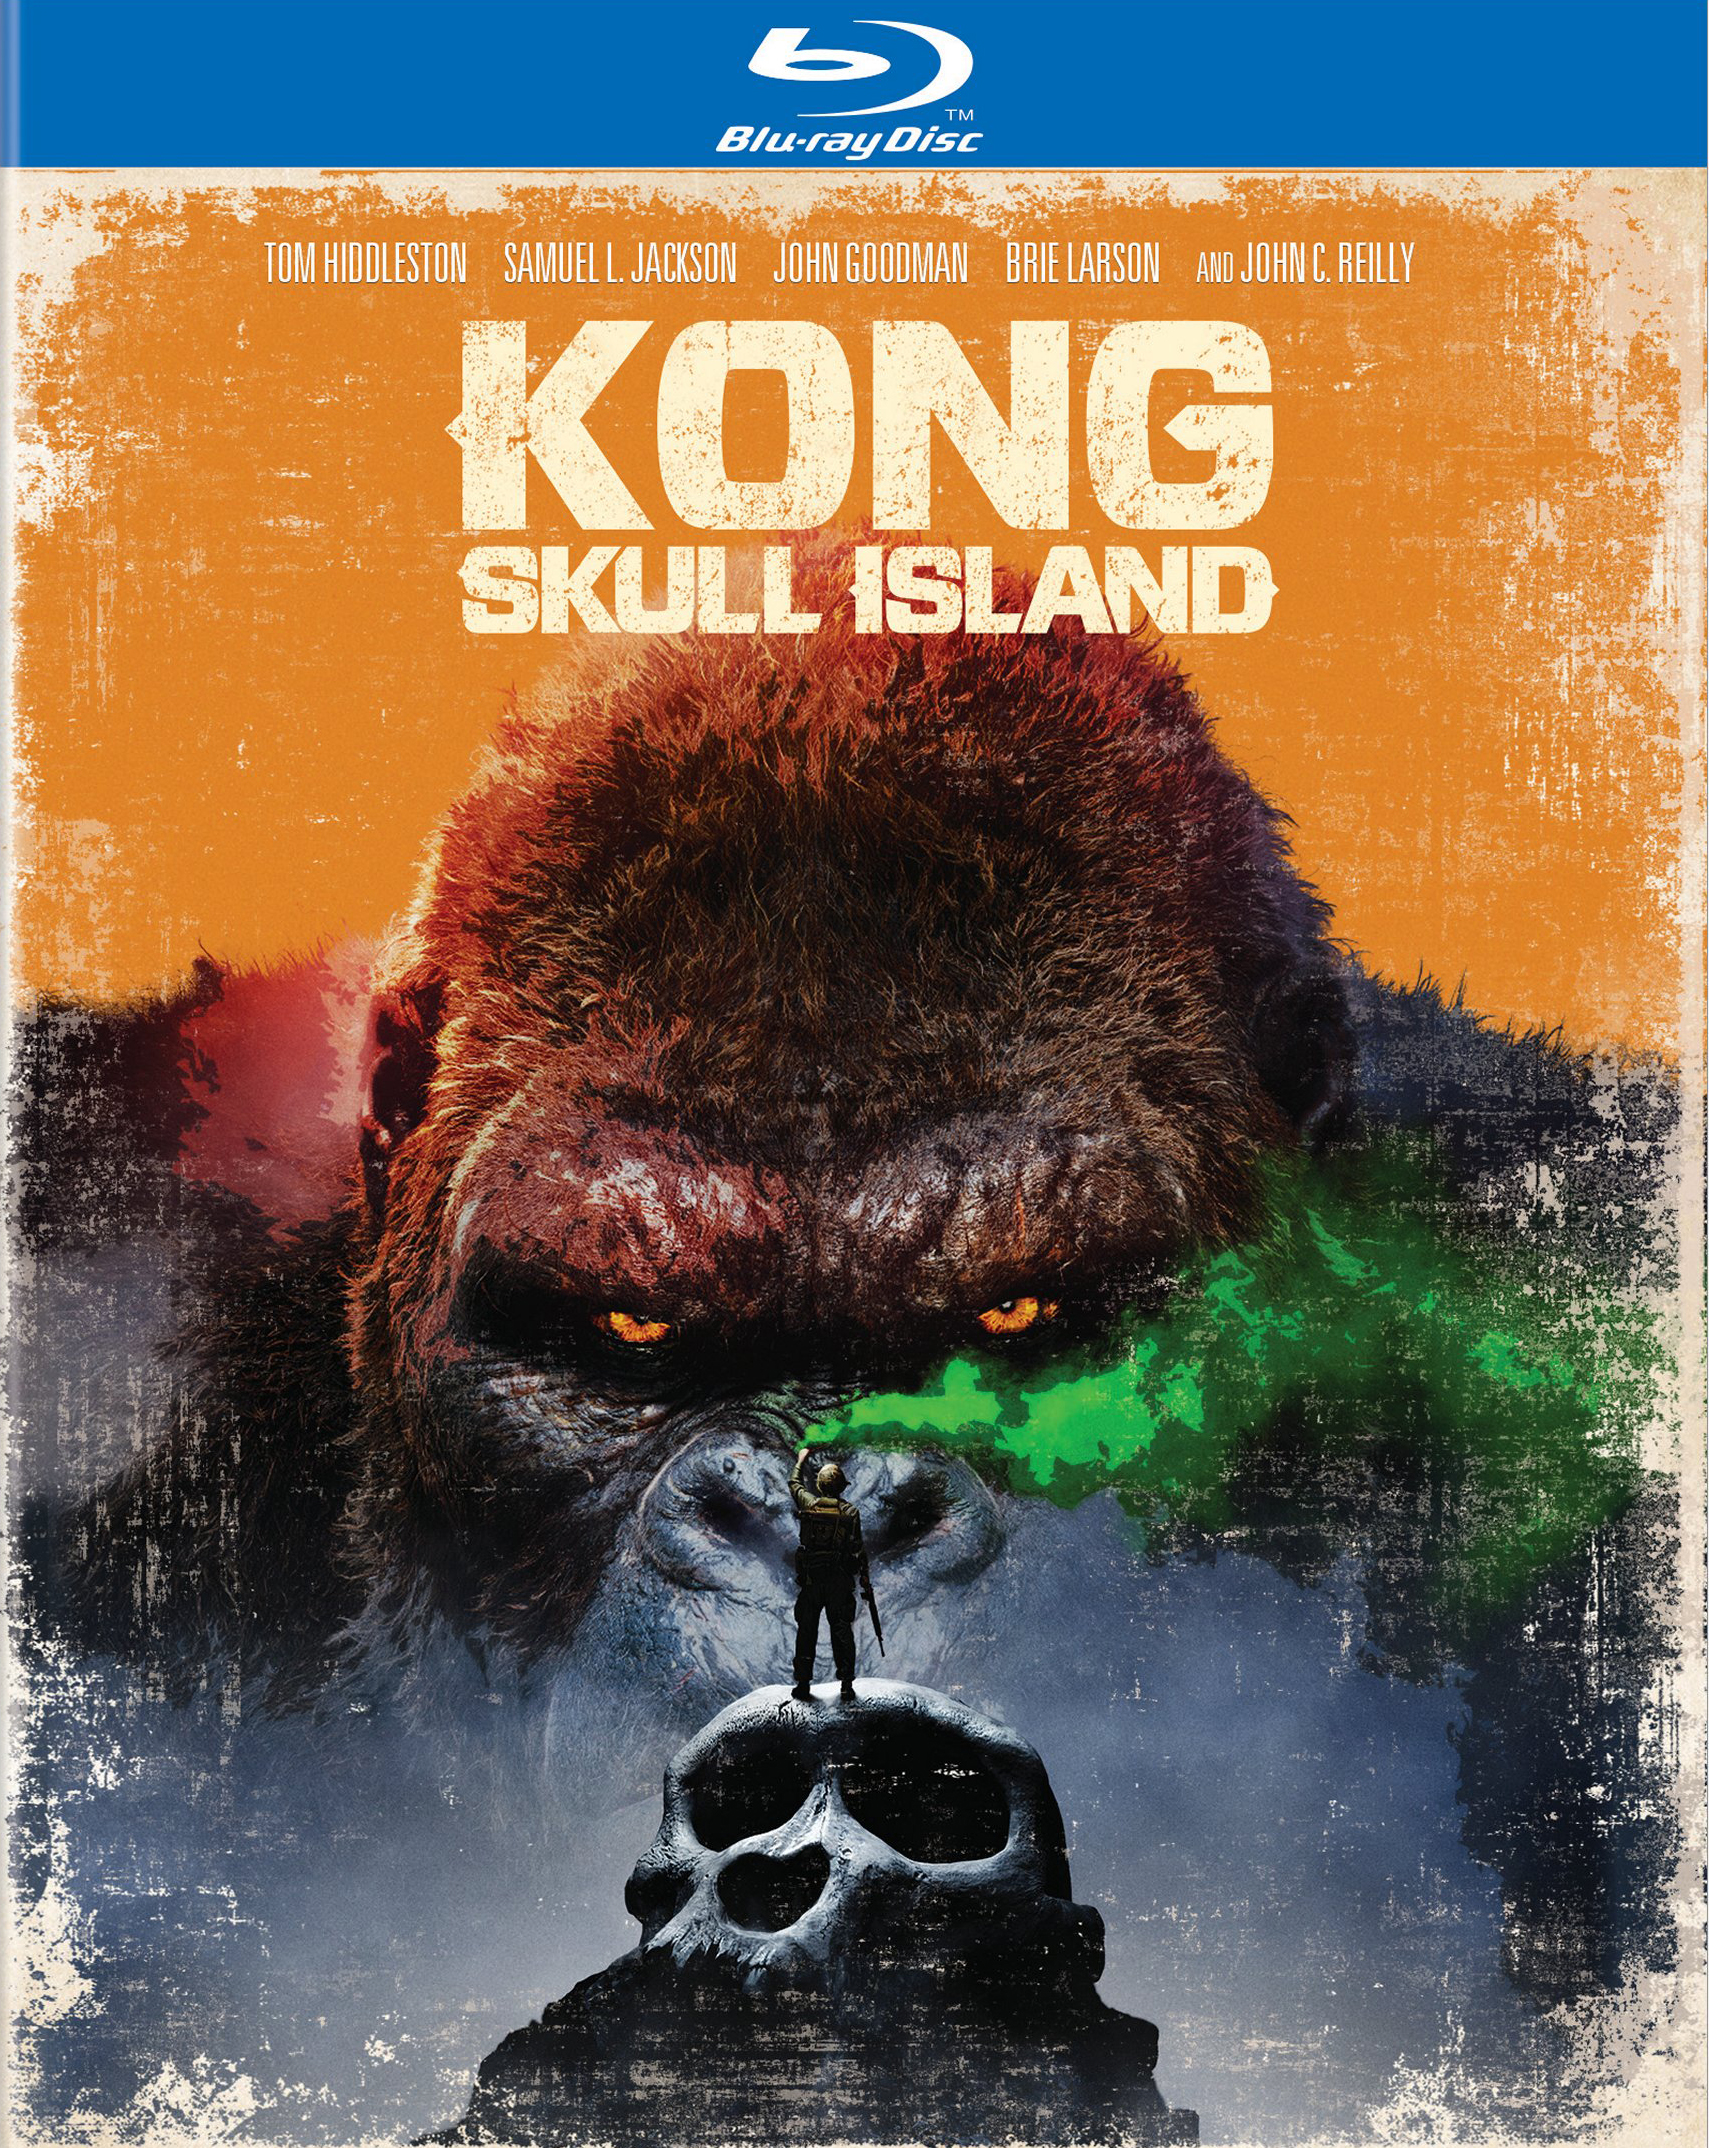 Skull Island Ruins  King kong skull island, Skull island, King kong